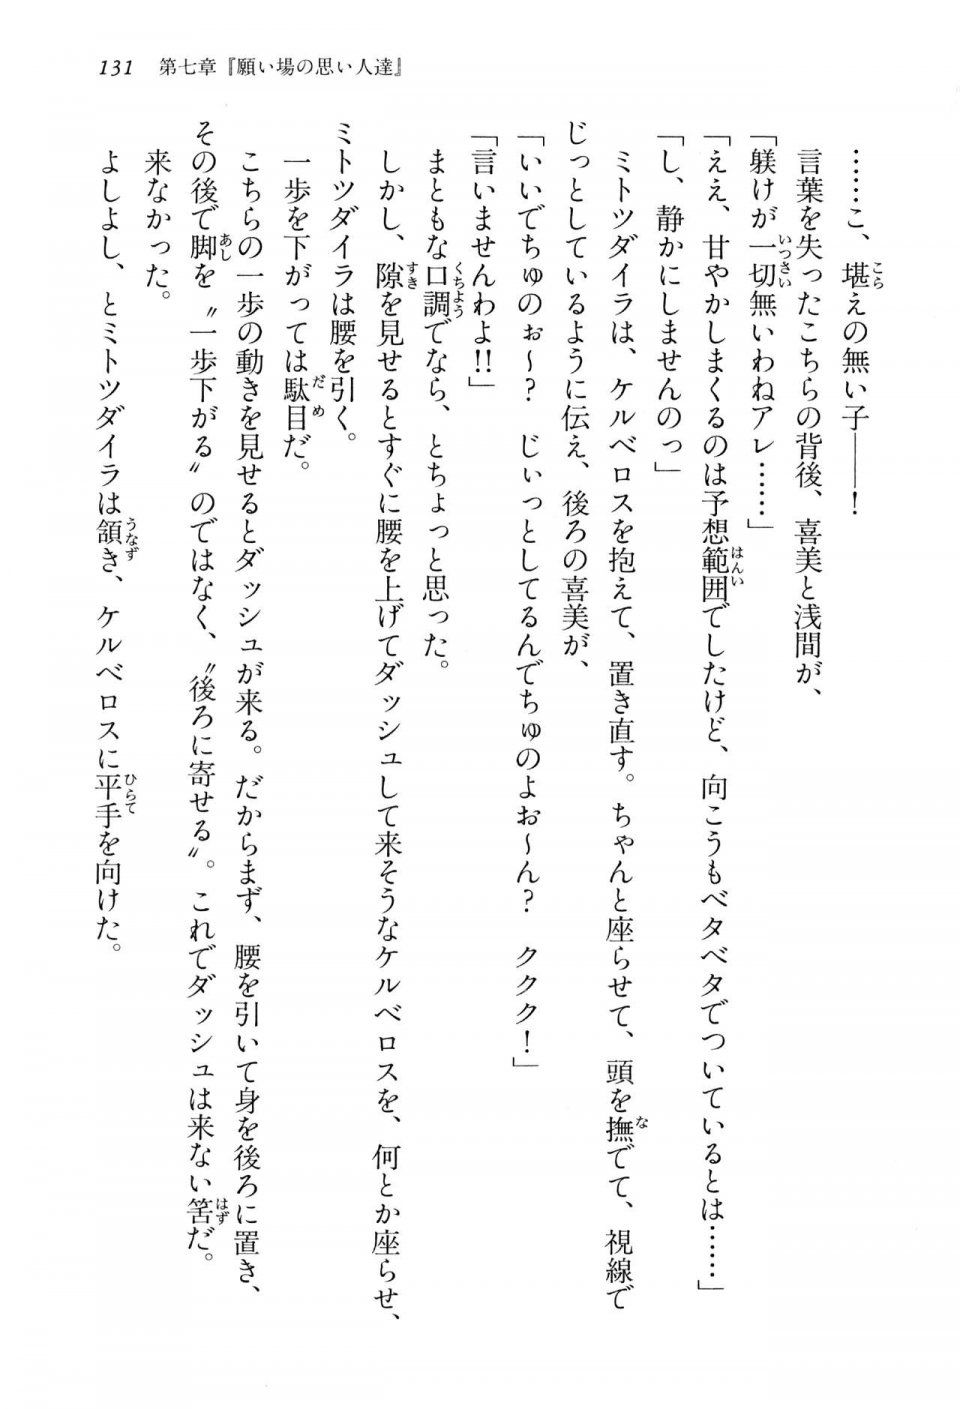 Kyoukai Senjou no Horizon BD Special Mininovel Vol 2(1B) - Photo #135